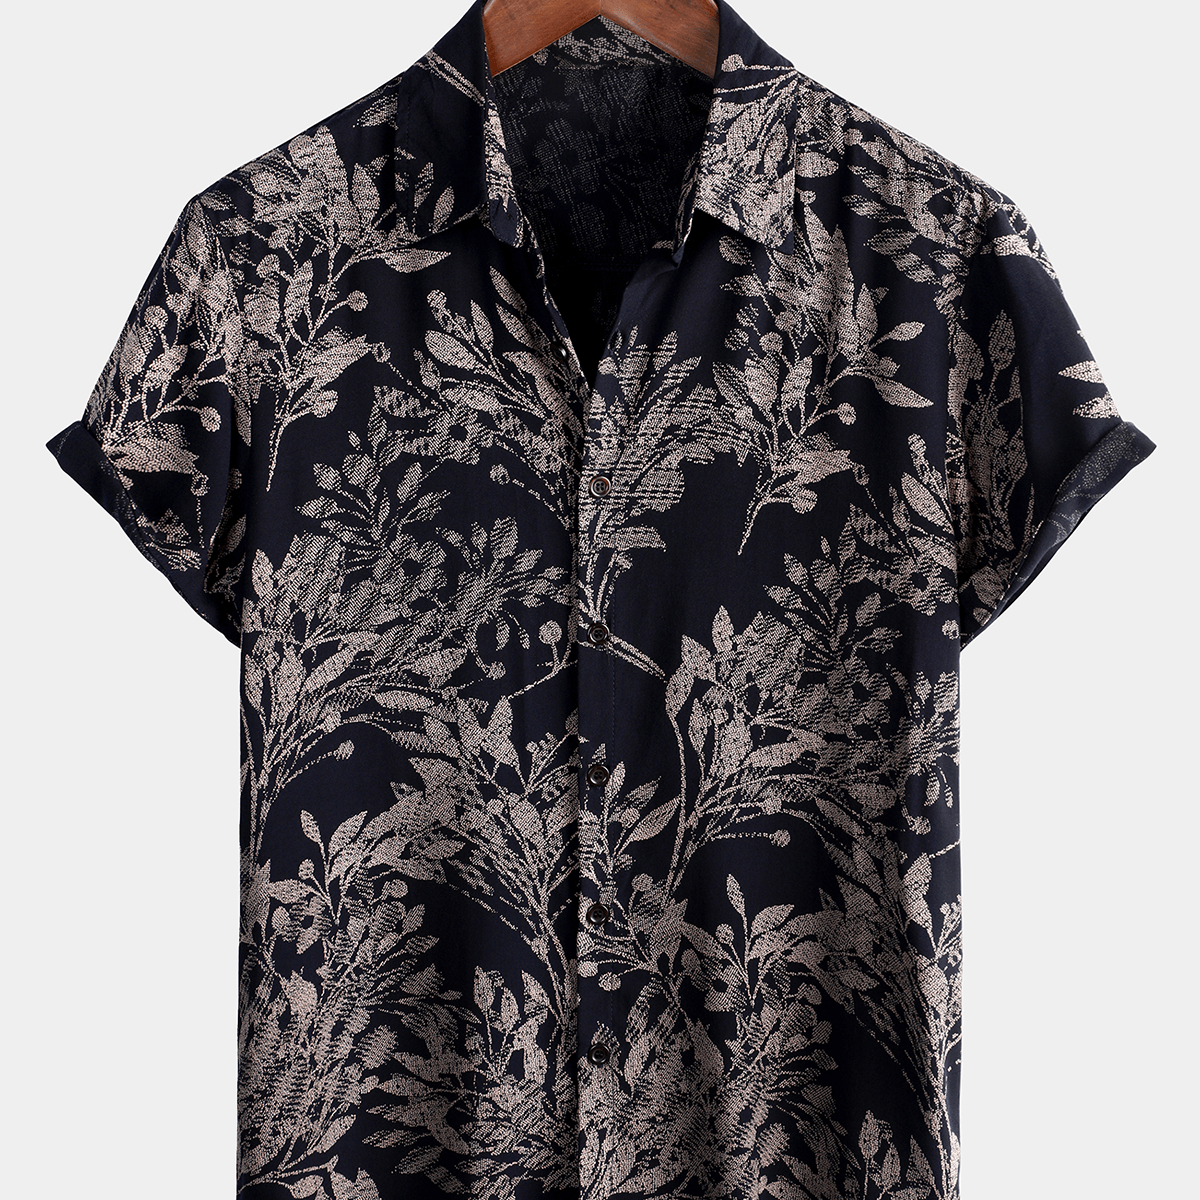 Men's Casual Retro Print Short Sleeve Summer Shirt